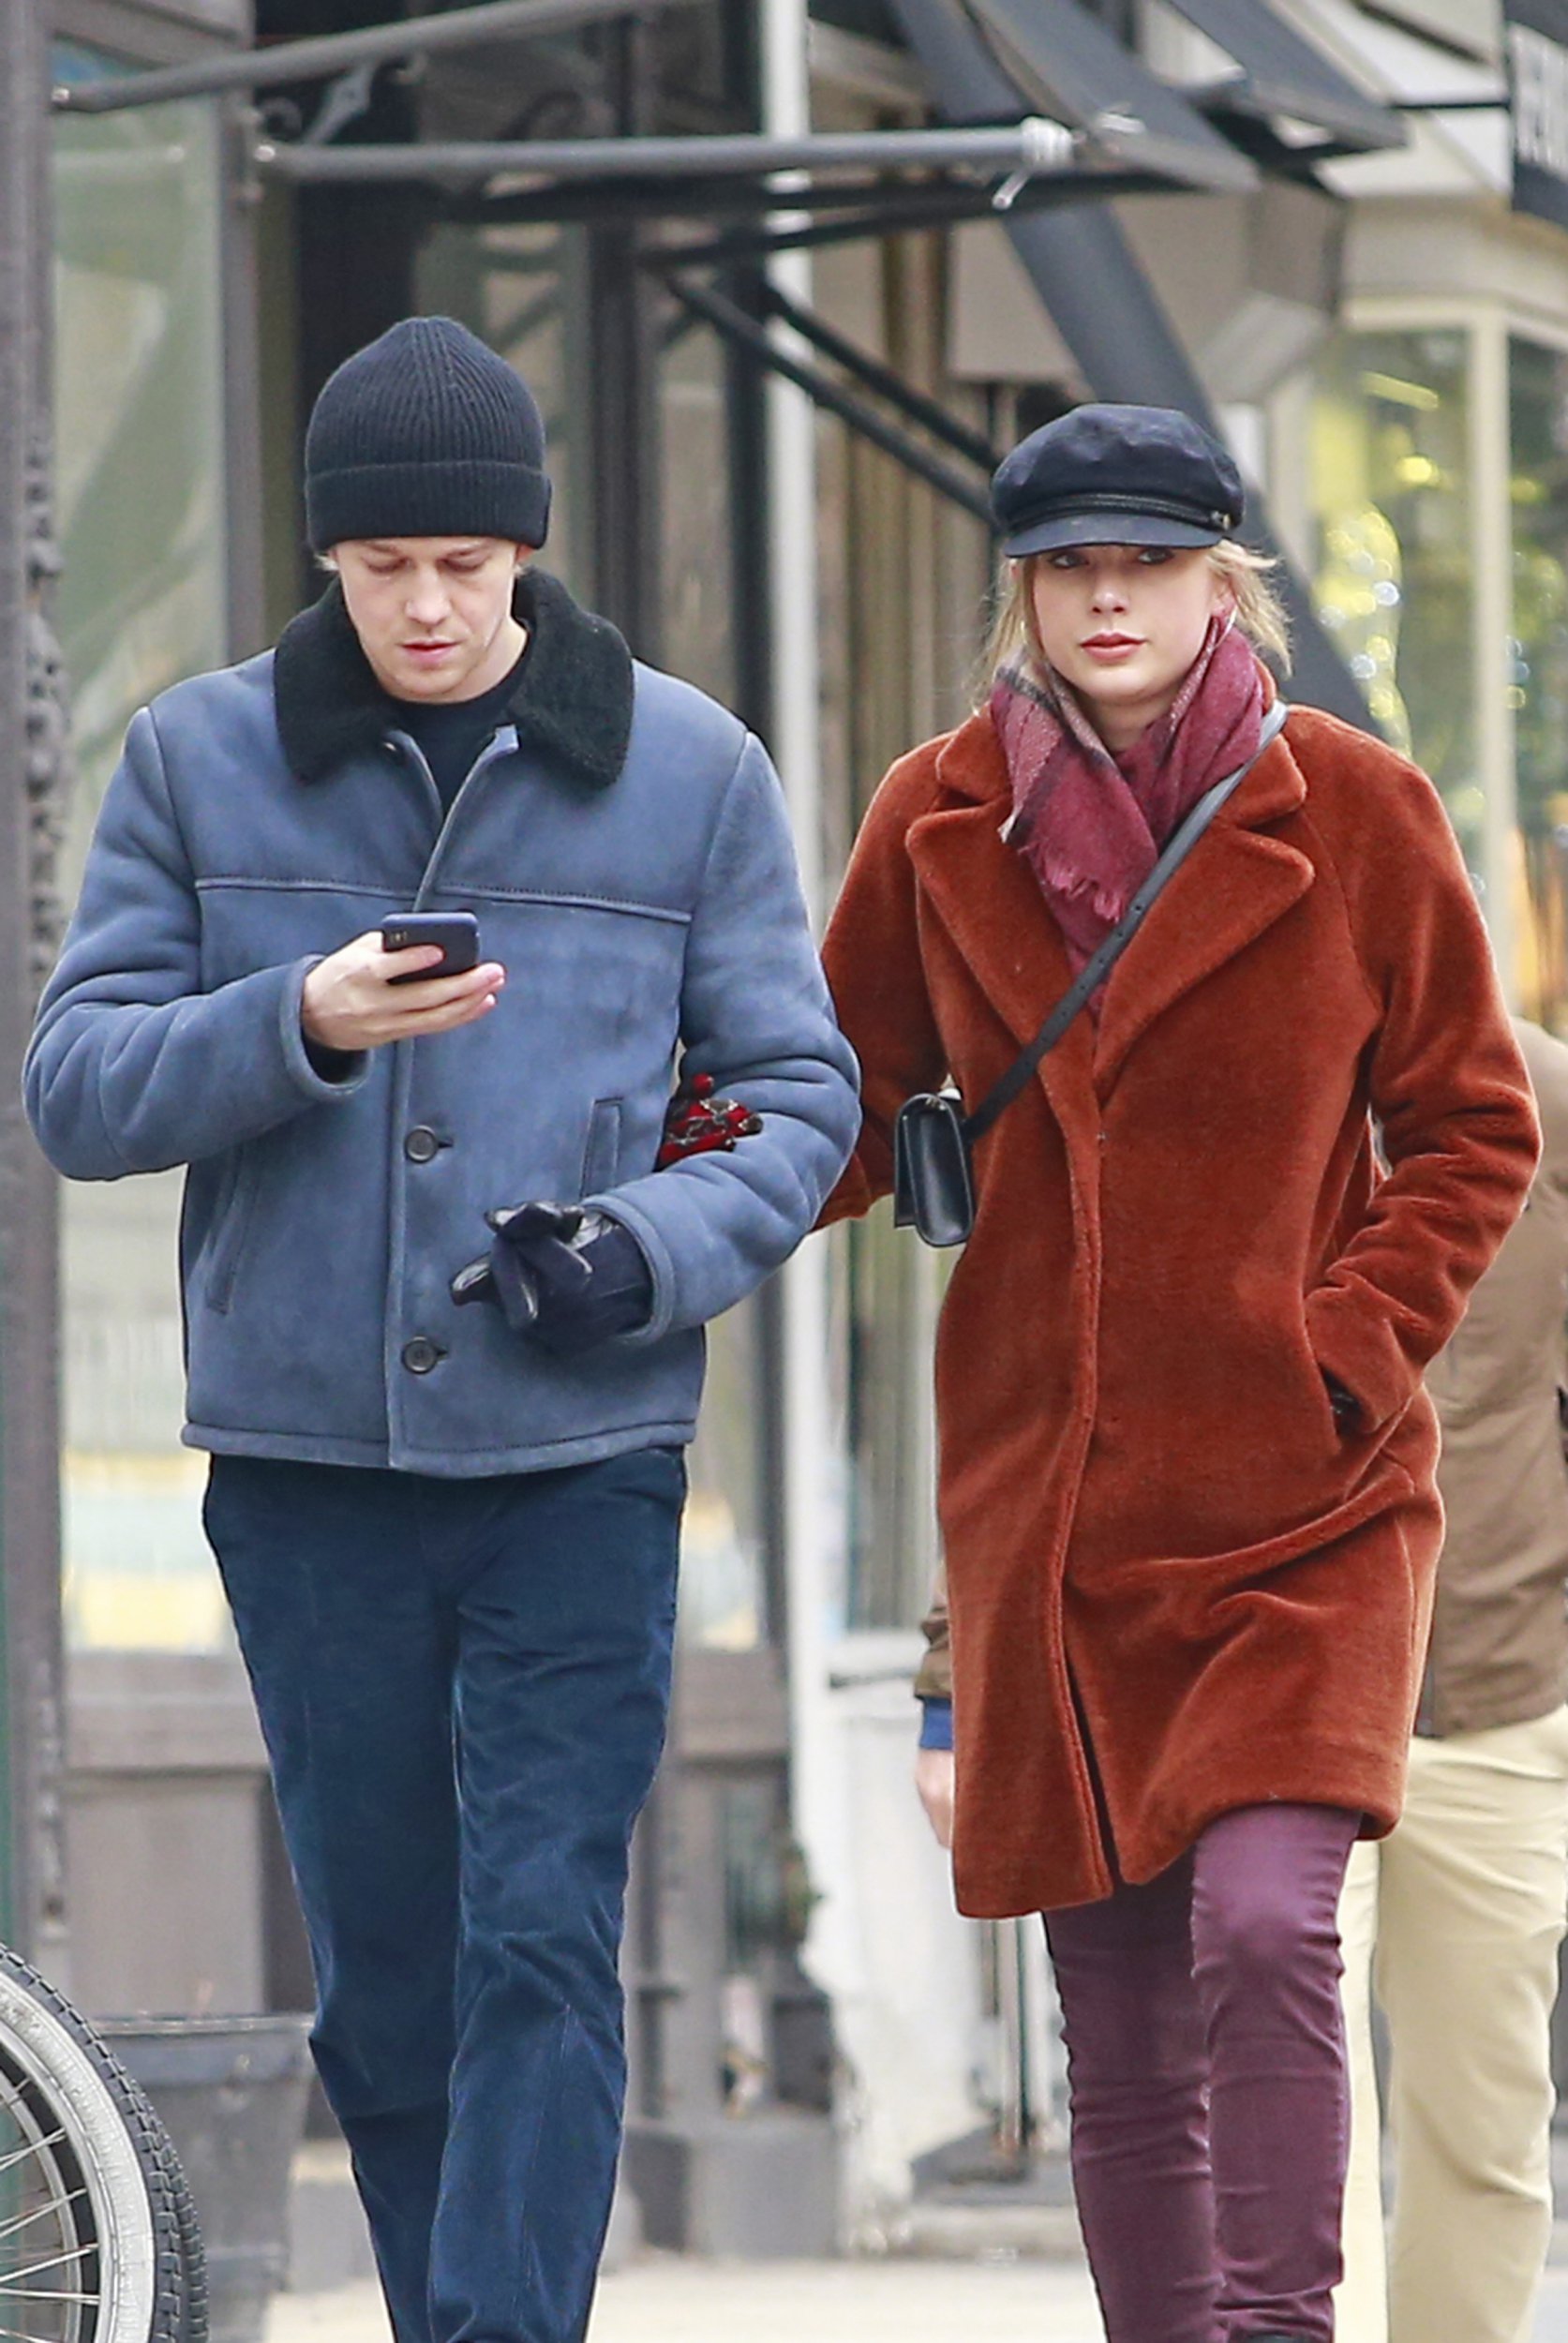  Taylor Swift and Joe Alwyn in New York City